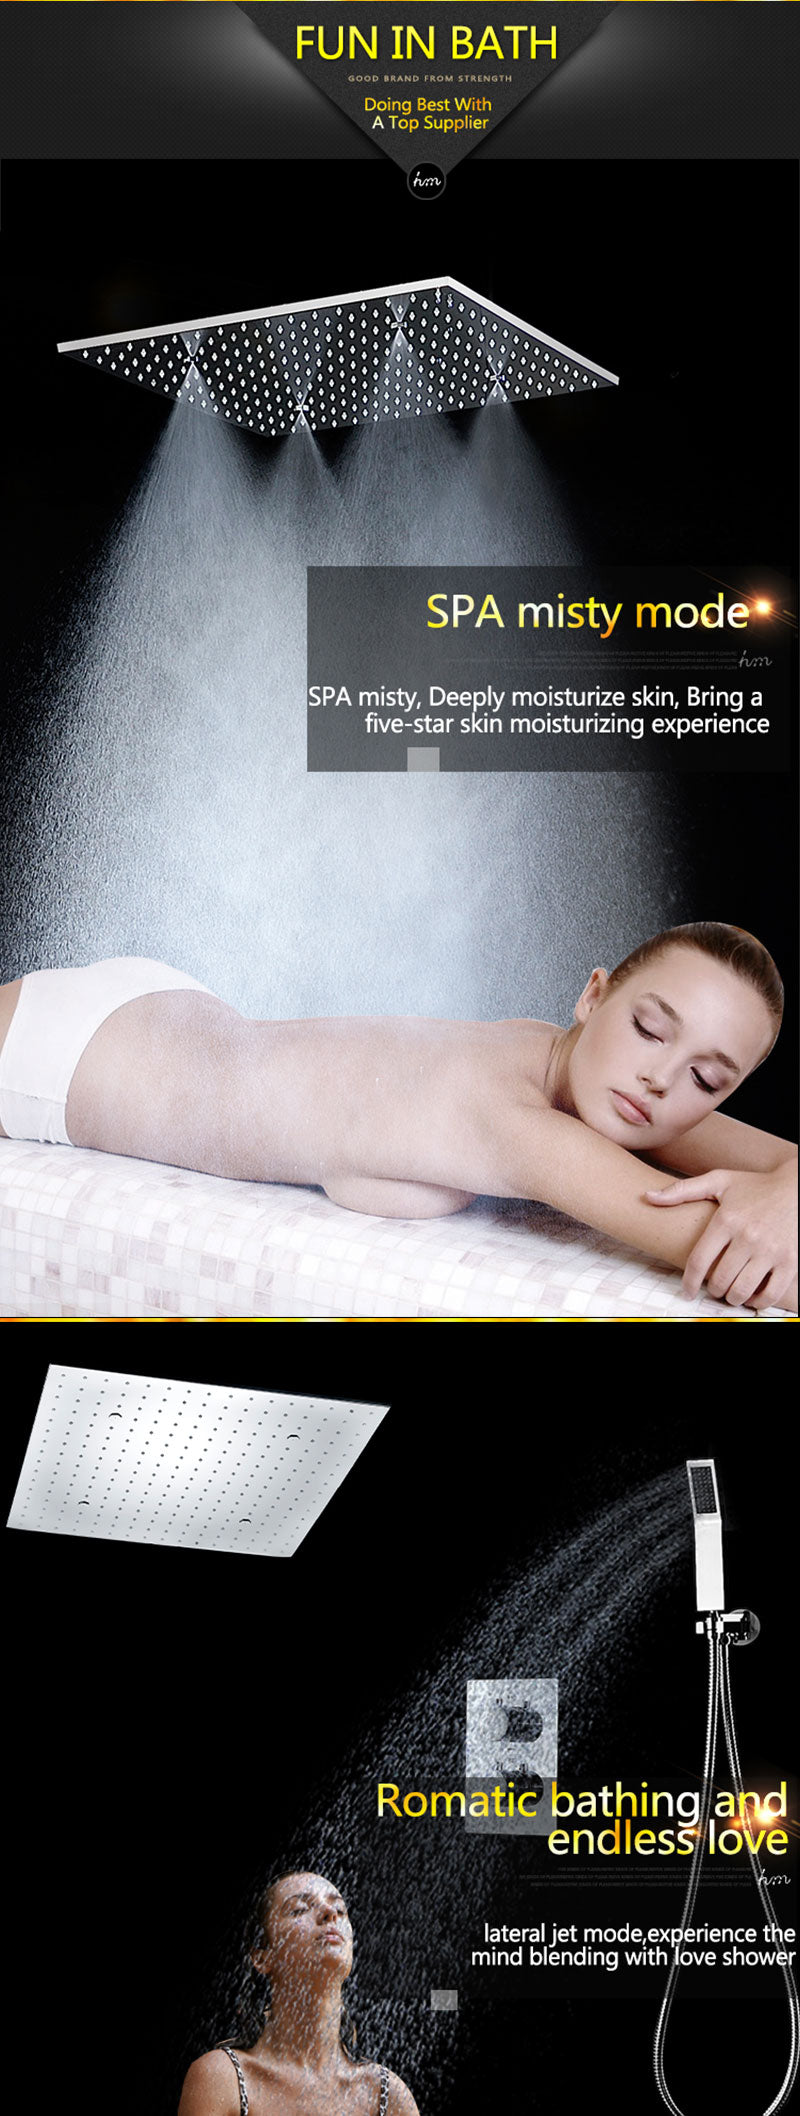 Shower Systems LED Shower Faucet Duscharmatur Sanitärkeramik LED Duschkopf Temperatur mit Licht